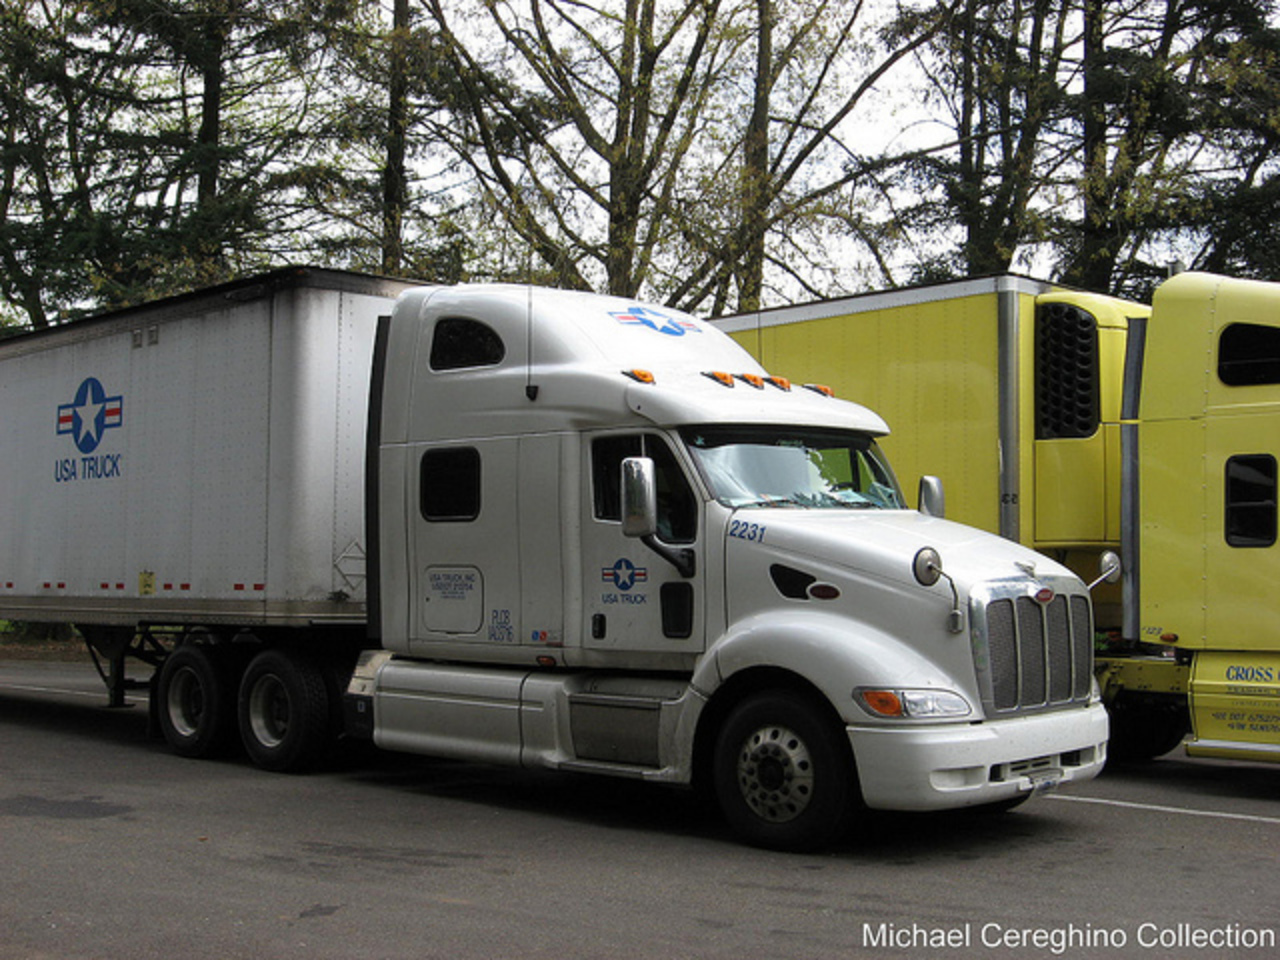 USA Truck Peterbilt 387 | Flickr - Photo Sharing!